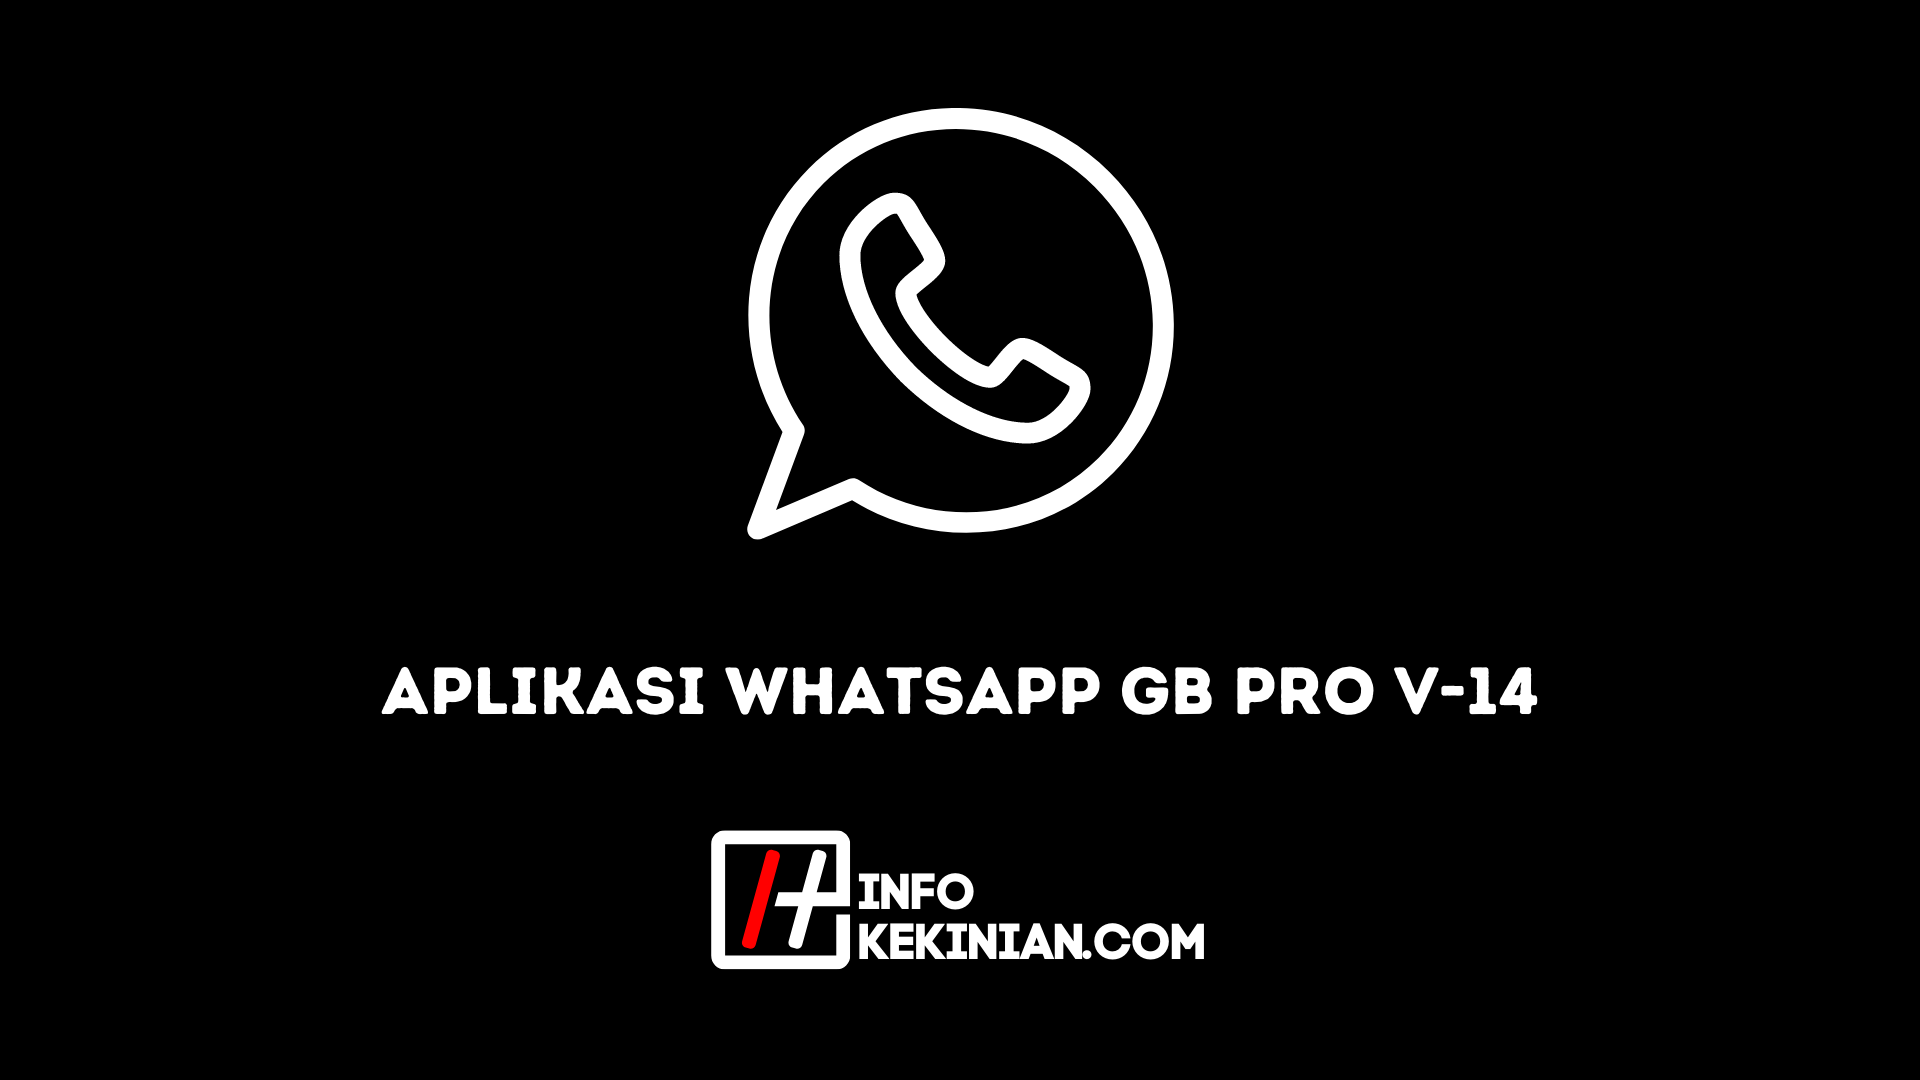 L'application WhatsApp Gb Pro V 14, voyons voir